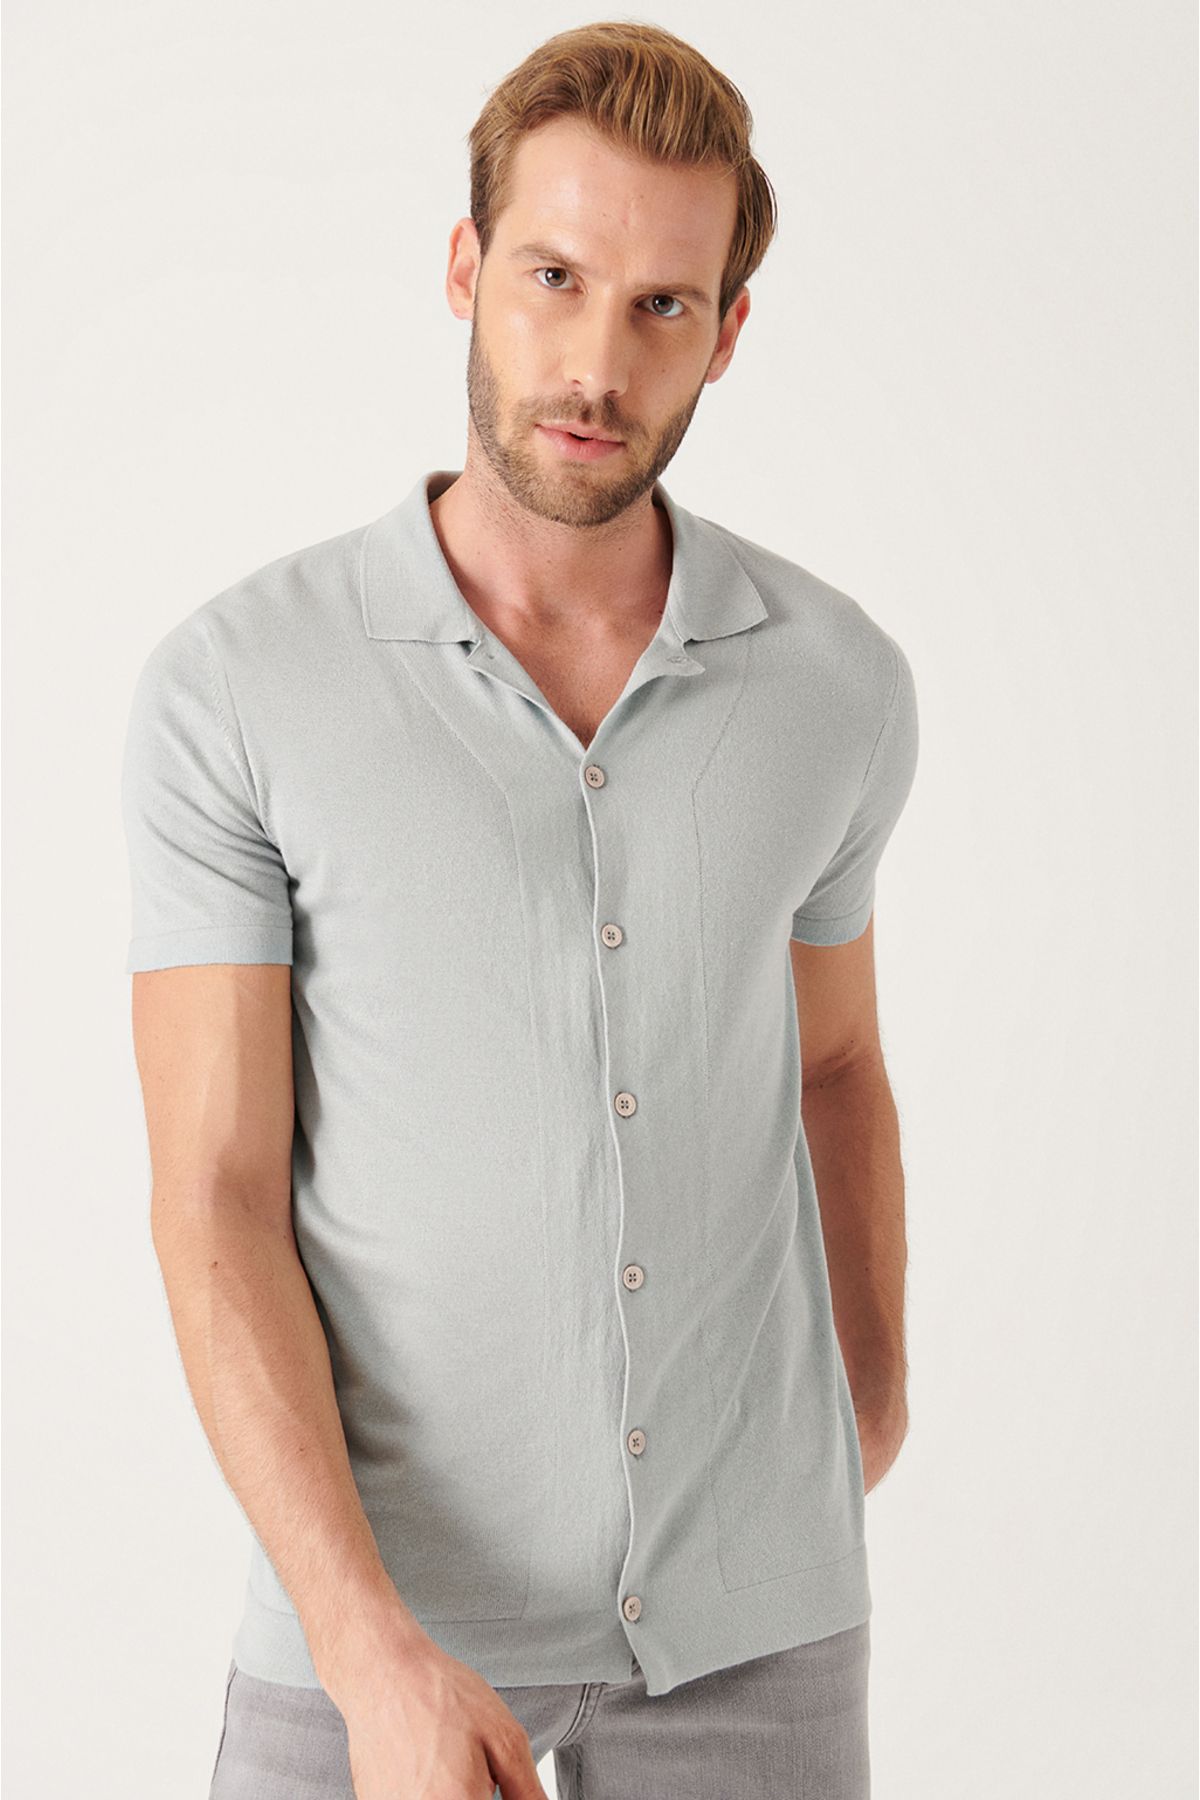 Avva تی شرت بافتنی مردانه یقه خاکستری کوبایی با دکمه استاندارد متناسب برش معمولی B005008